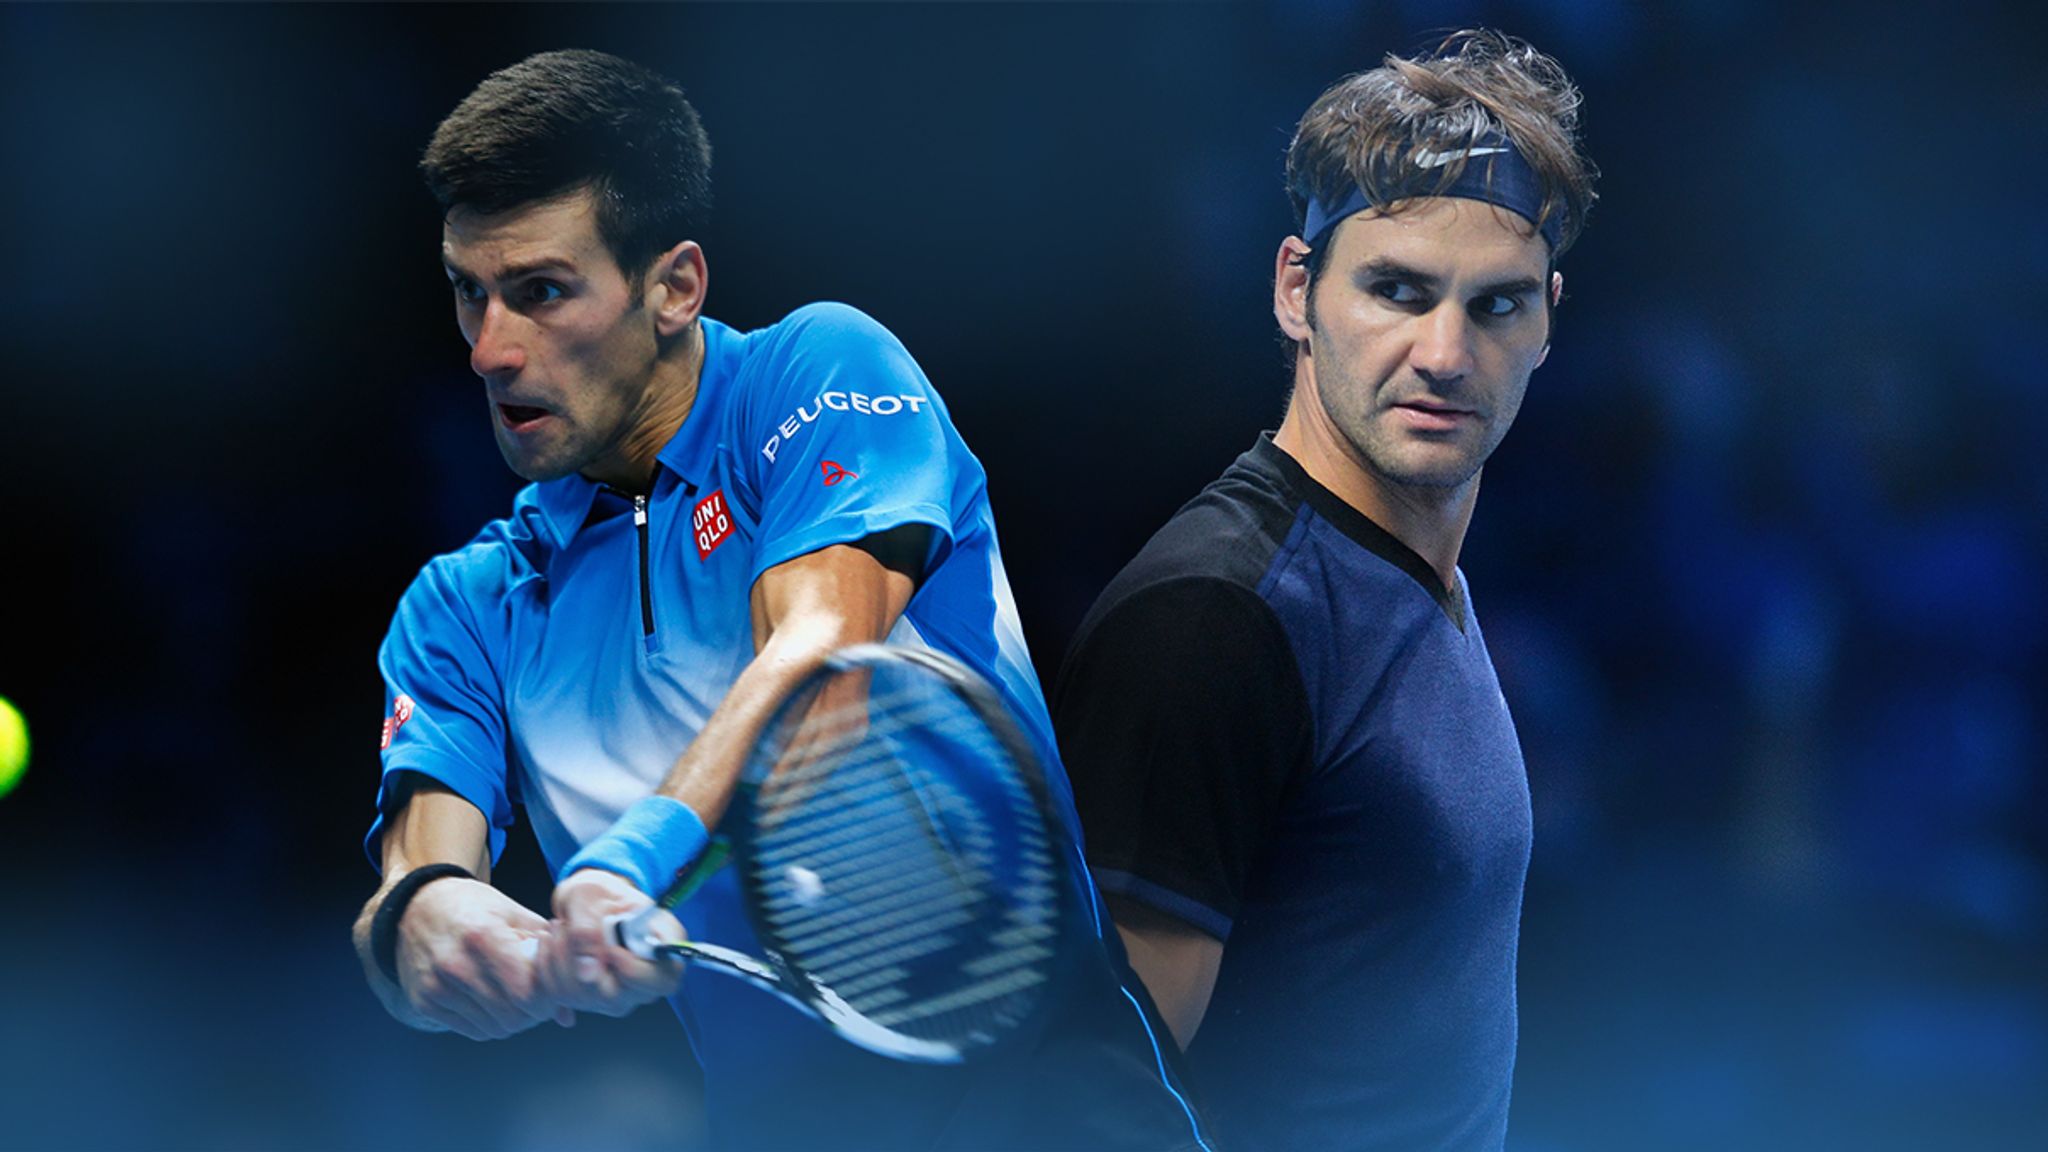 Novak Djokovic vs Roger Federer classic matches ahead of their Australian Open showdown Tennis News Sky Sports